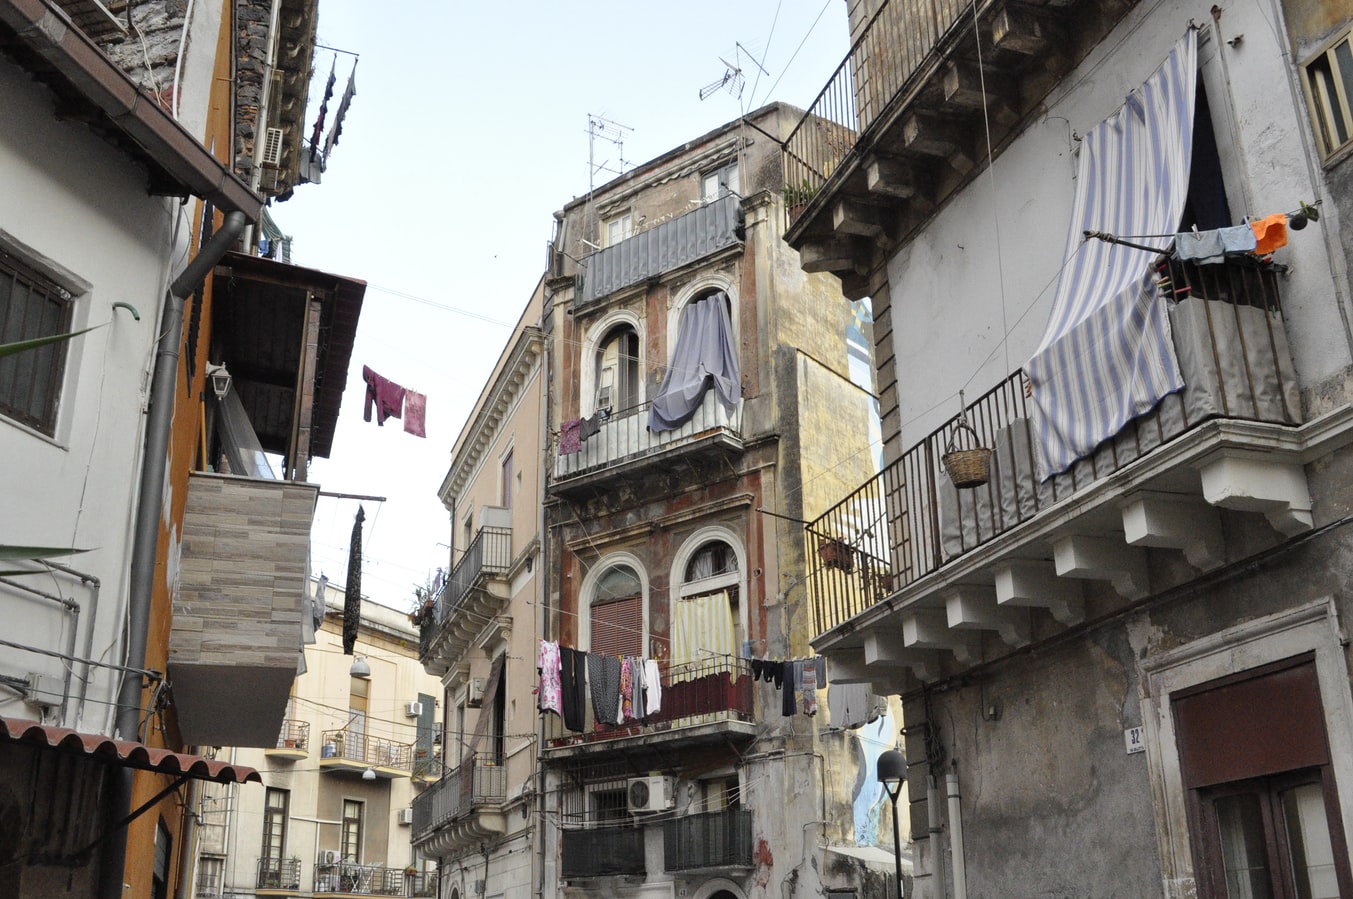 Sicilian street view